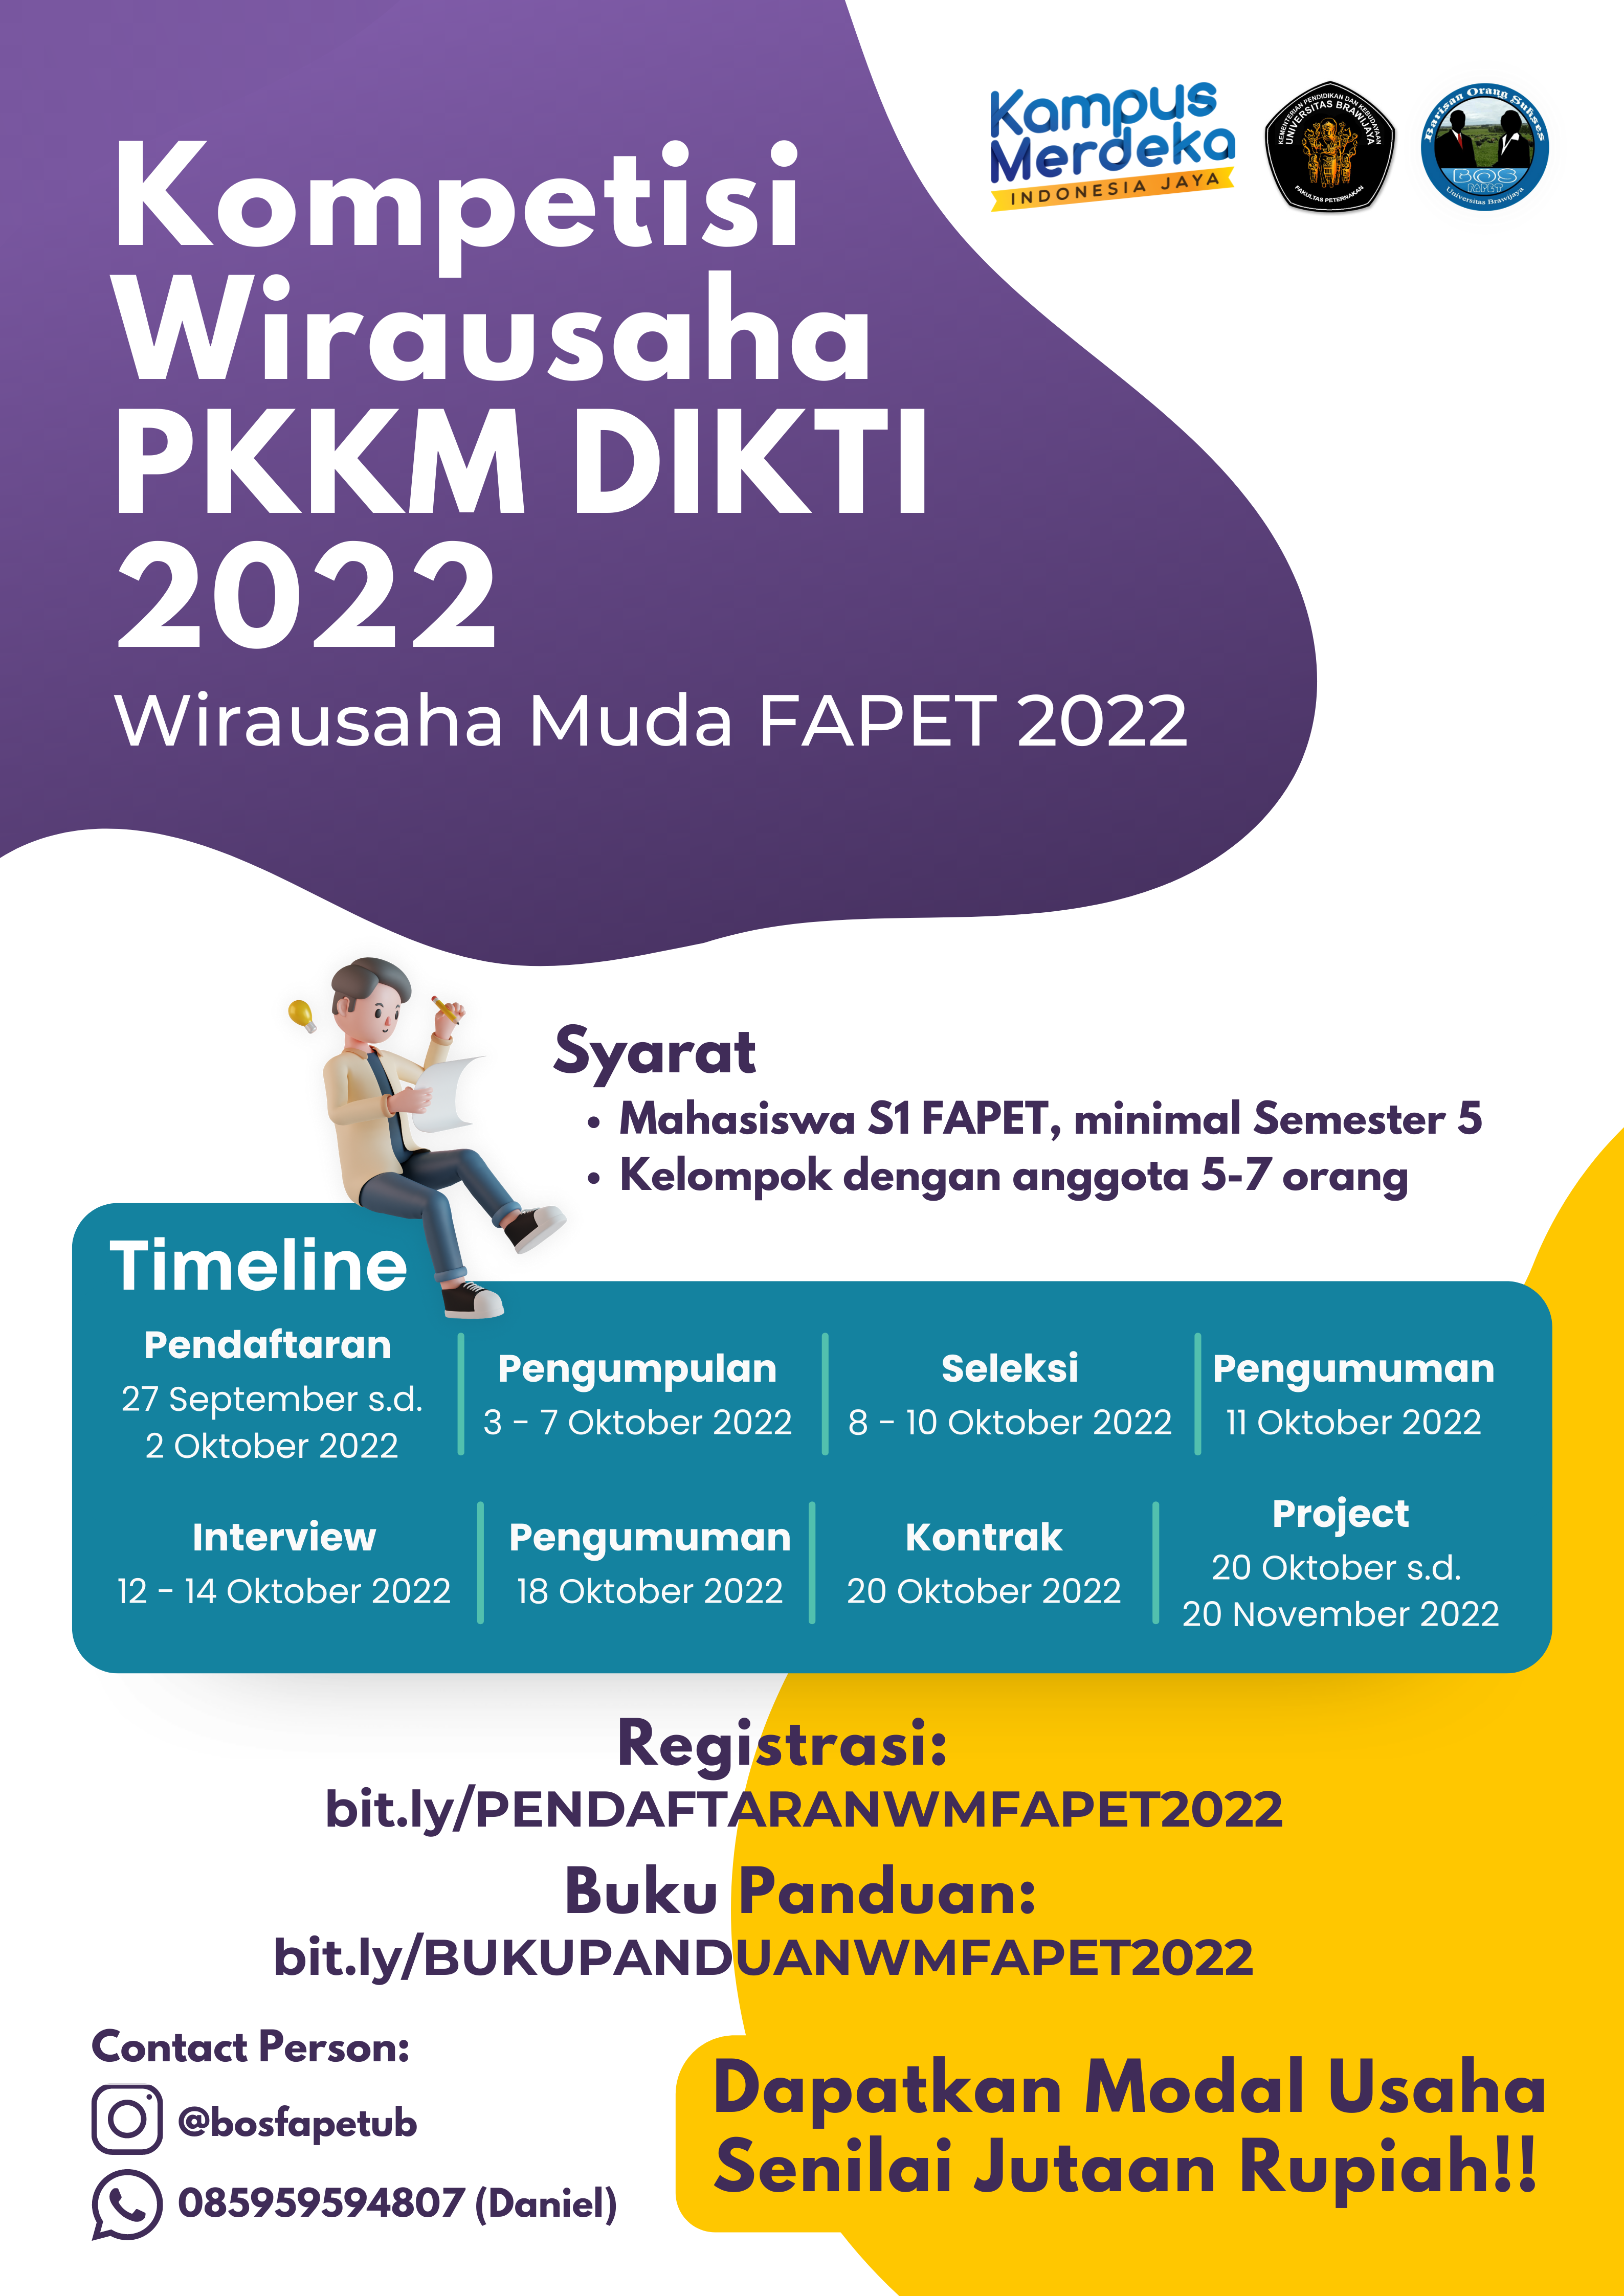 Entrepreneurial Competition PKKM DIKTI Student Entrepreneurship 2022